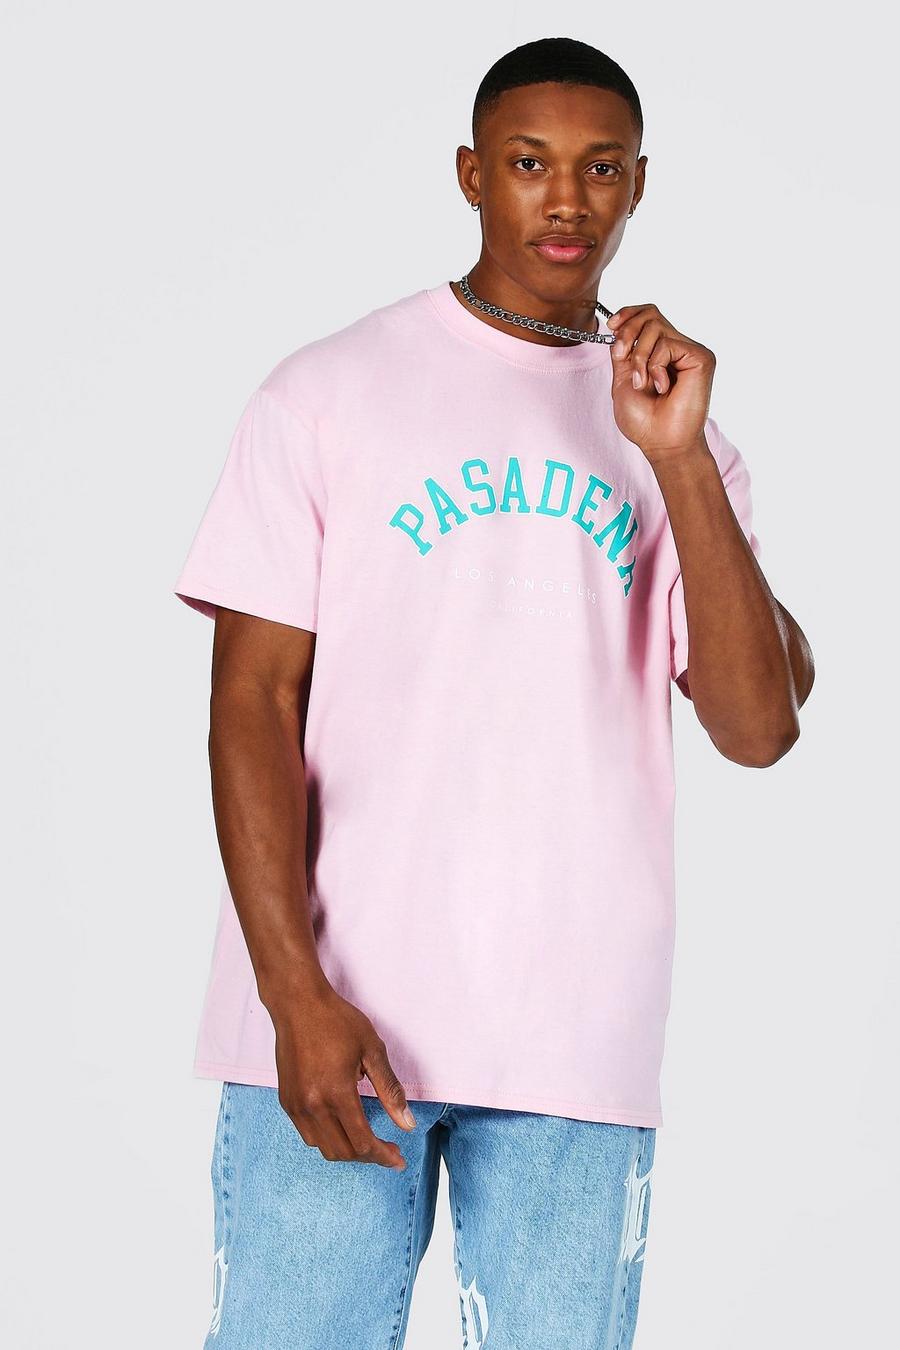 Pink Oversized Pasadena Varsity Graphic T-Shirt image number 1